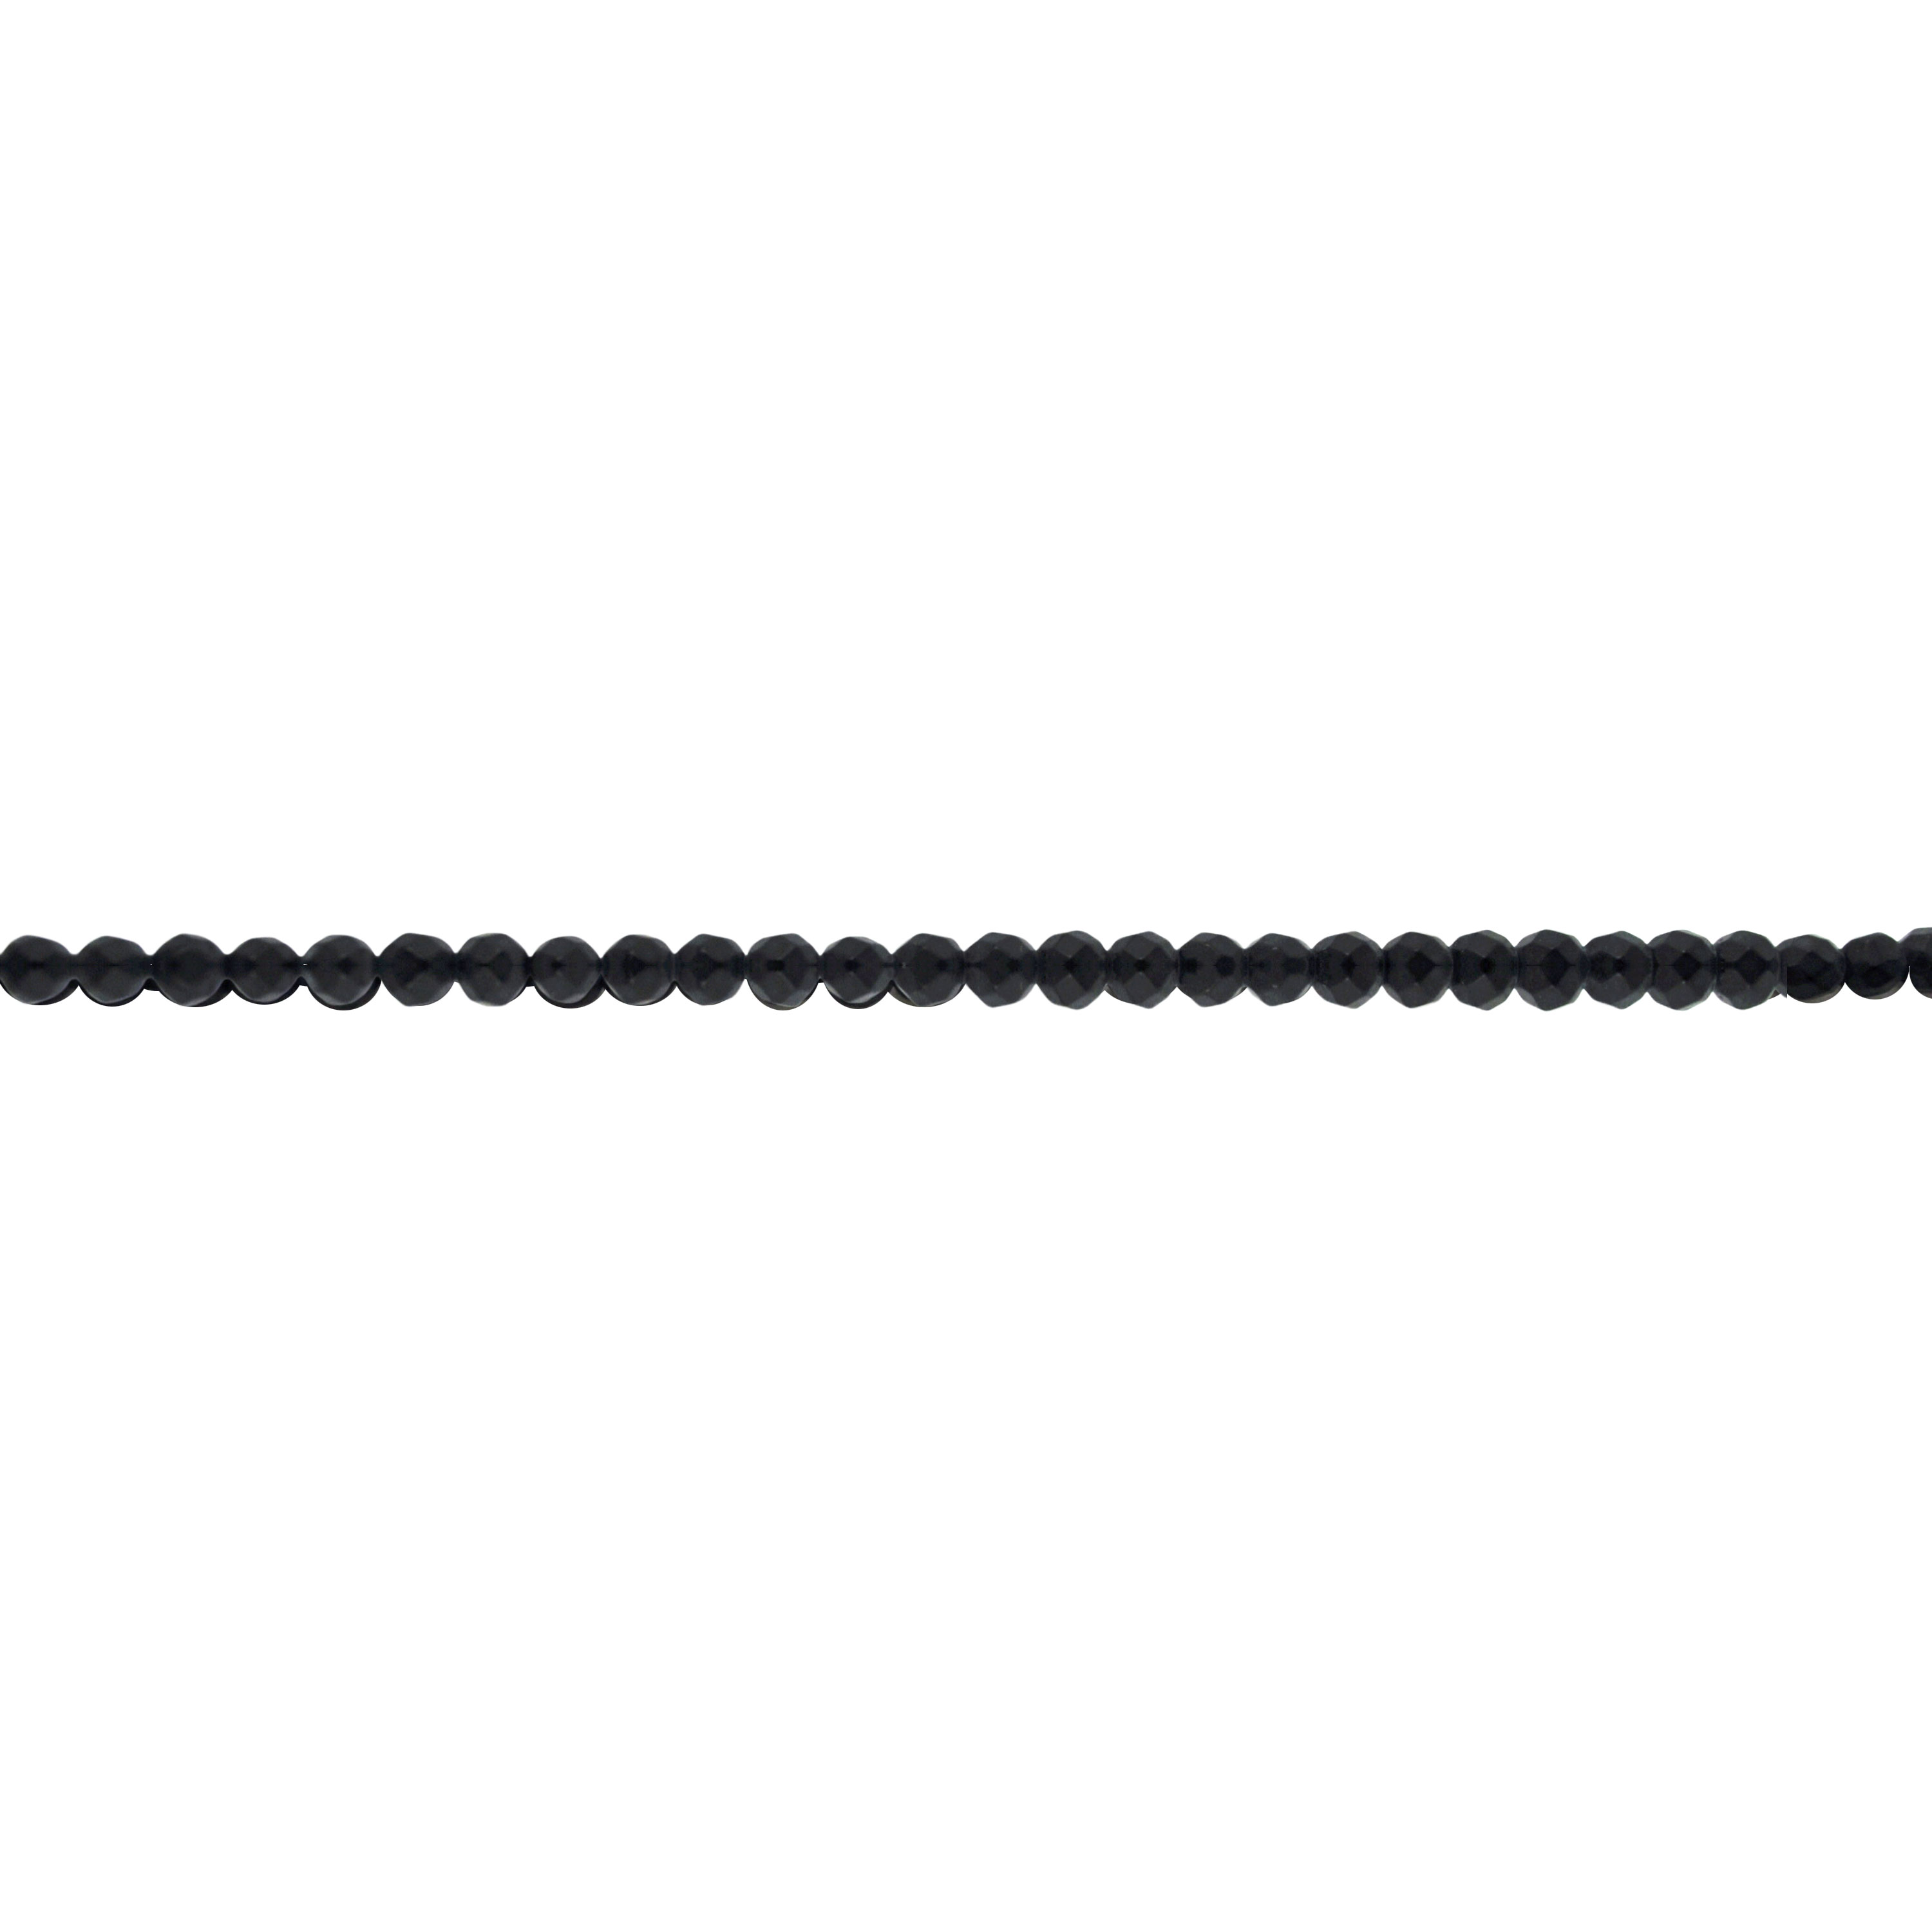 4mm Matte Black Onyx - Faceted